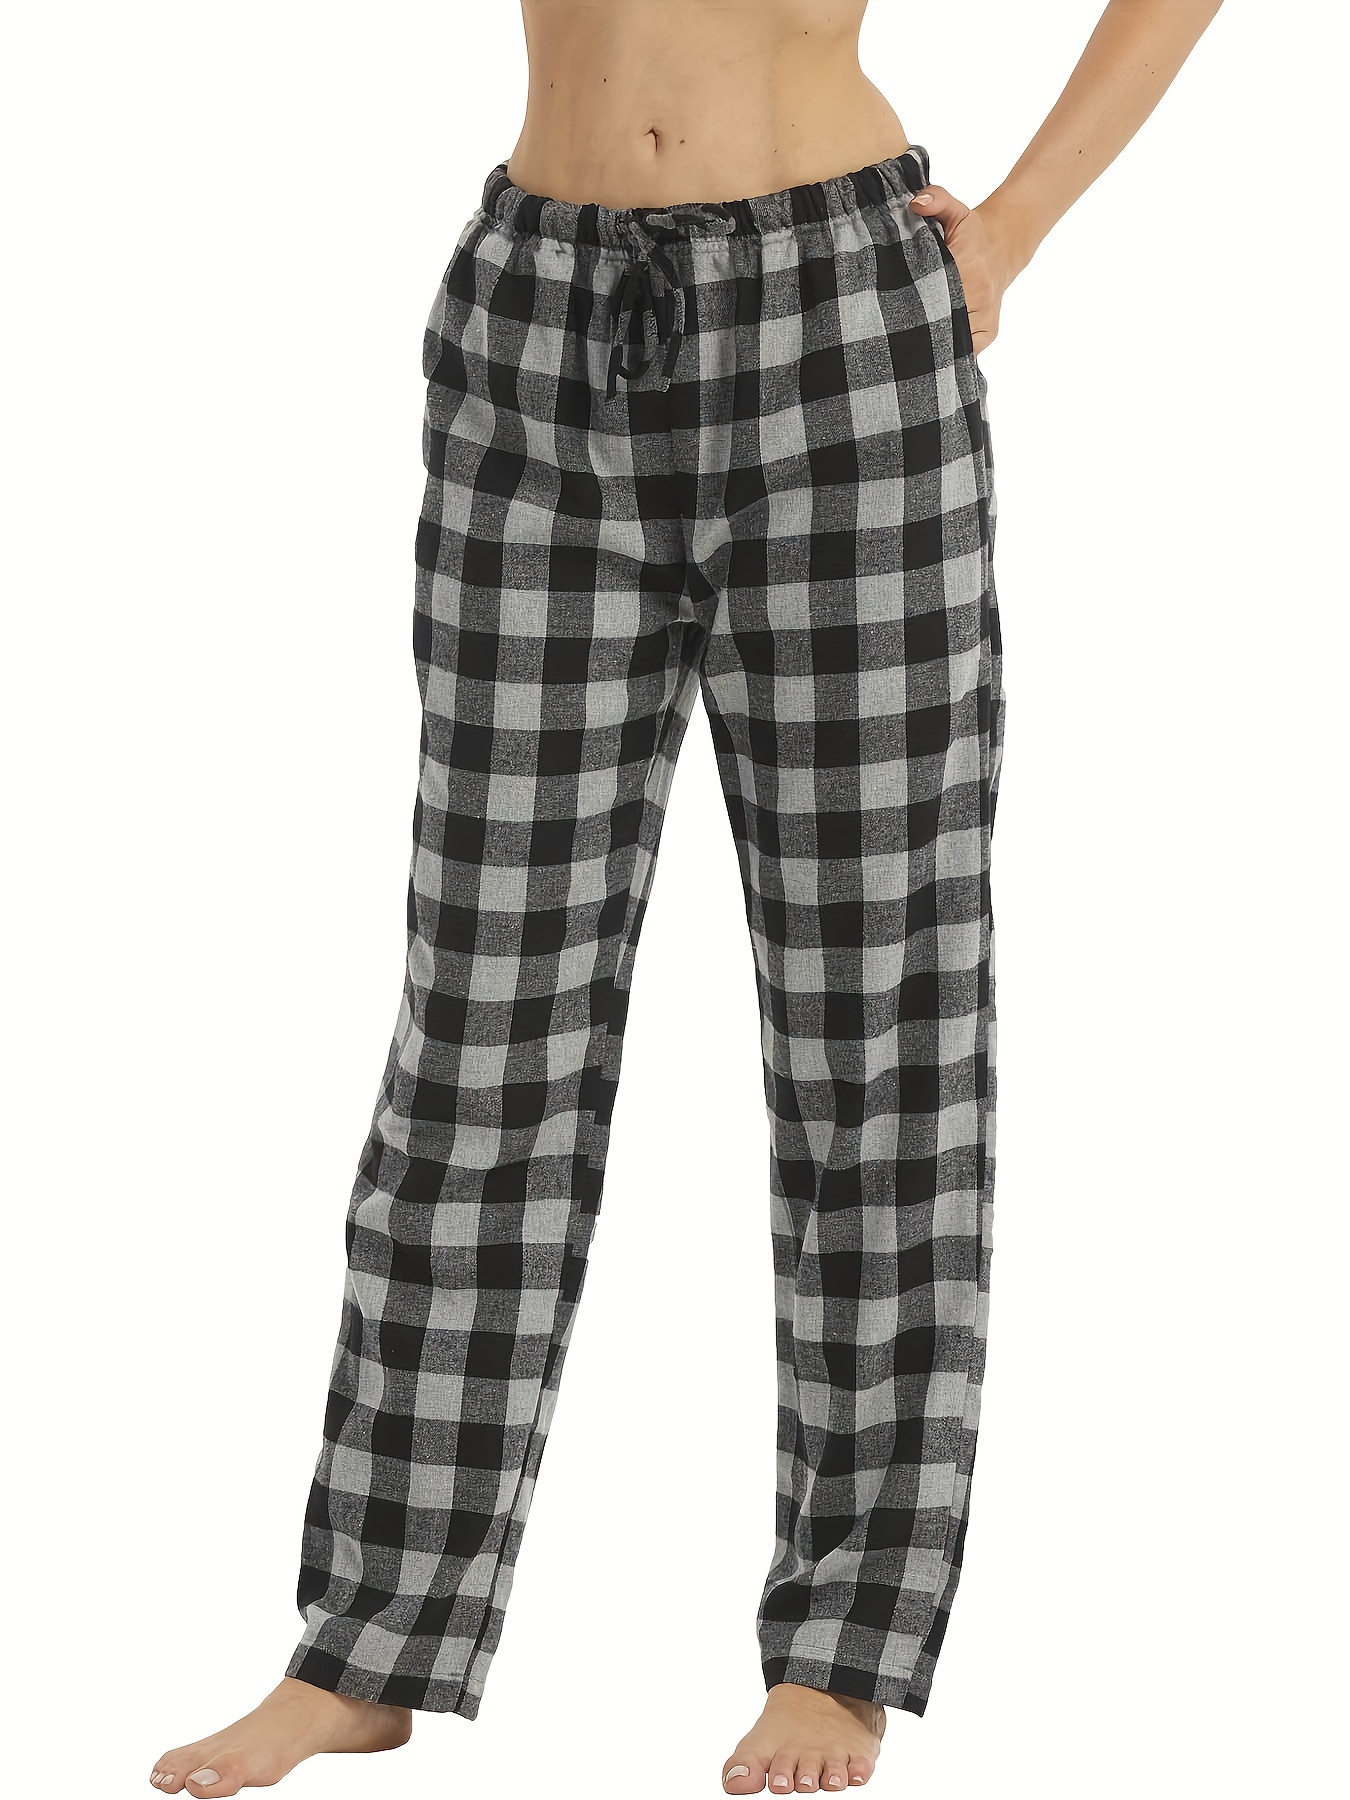 Plaid Pajama Pants Women,Womens Pajama Pants Casual Comfy Plaid Print  Pajamas Pants Wide Leg Lounge Pjs Pj Pants Women